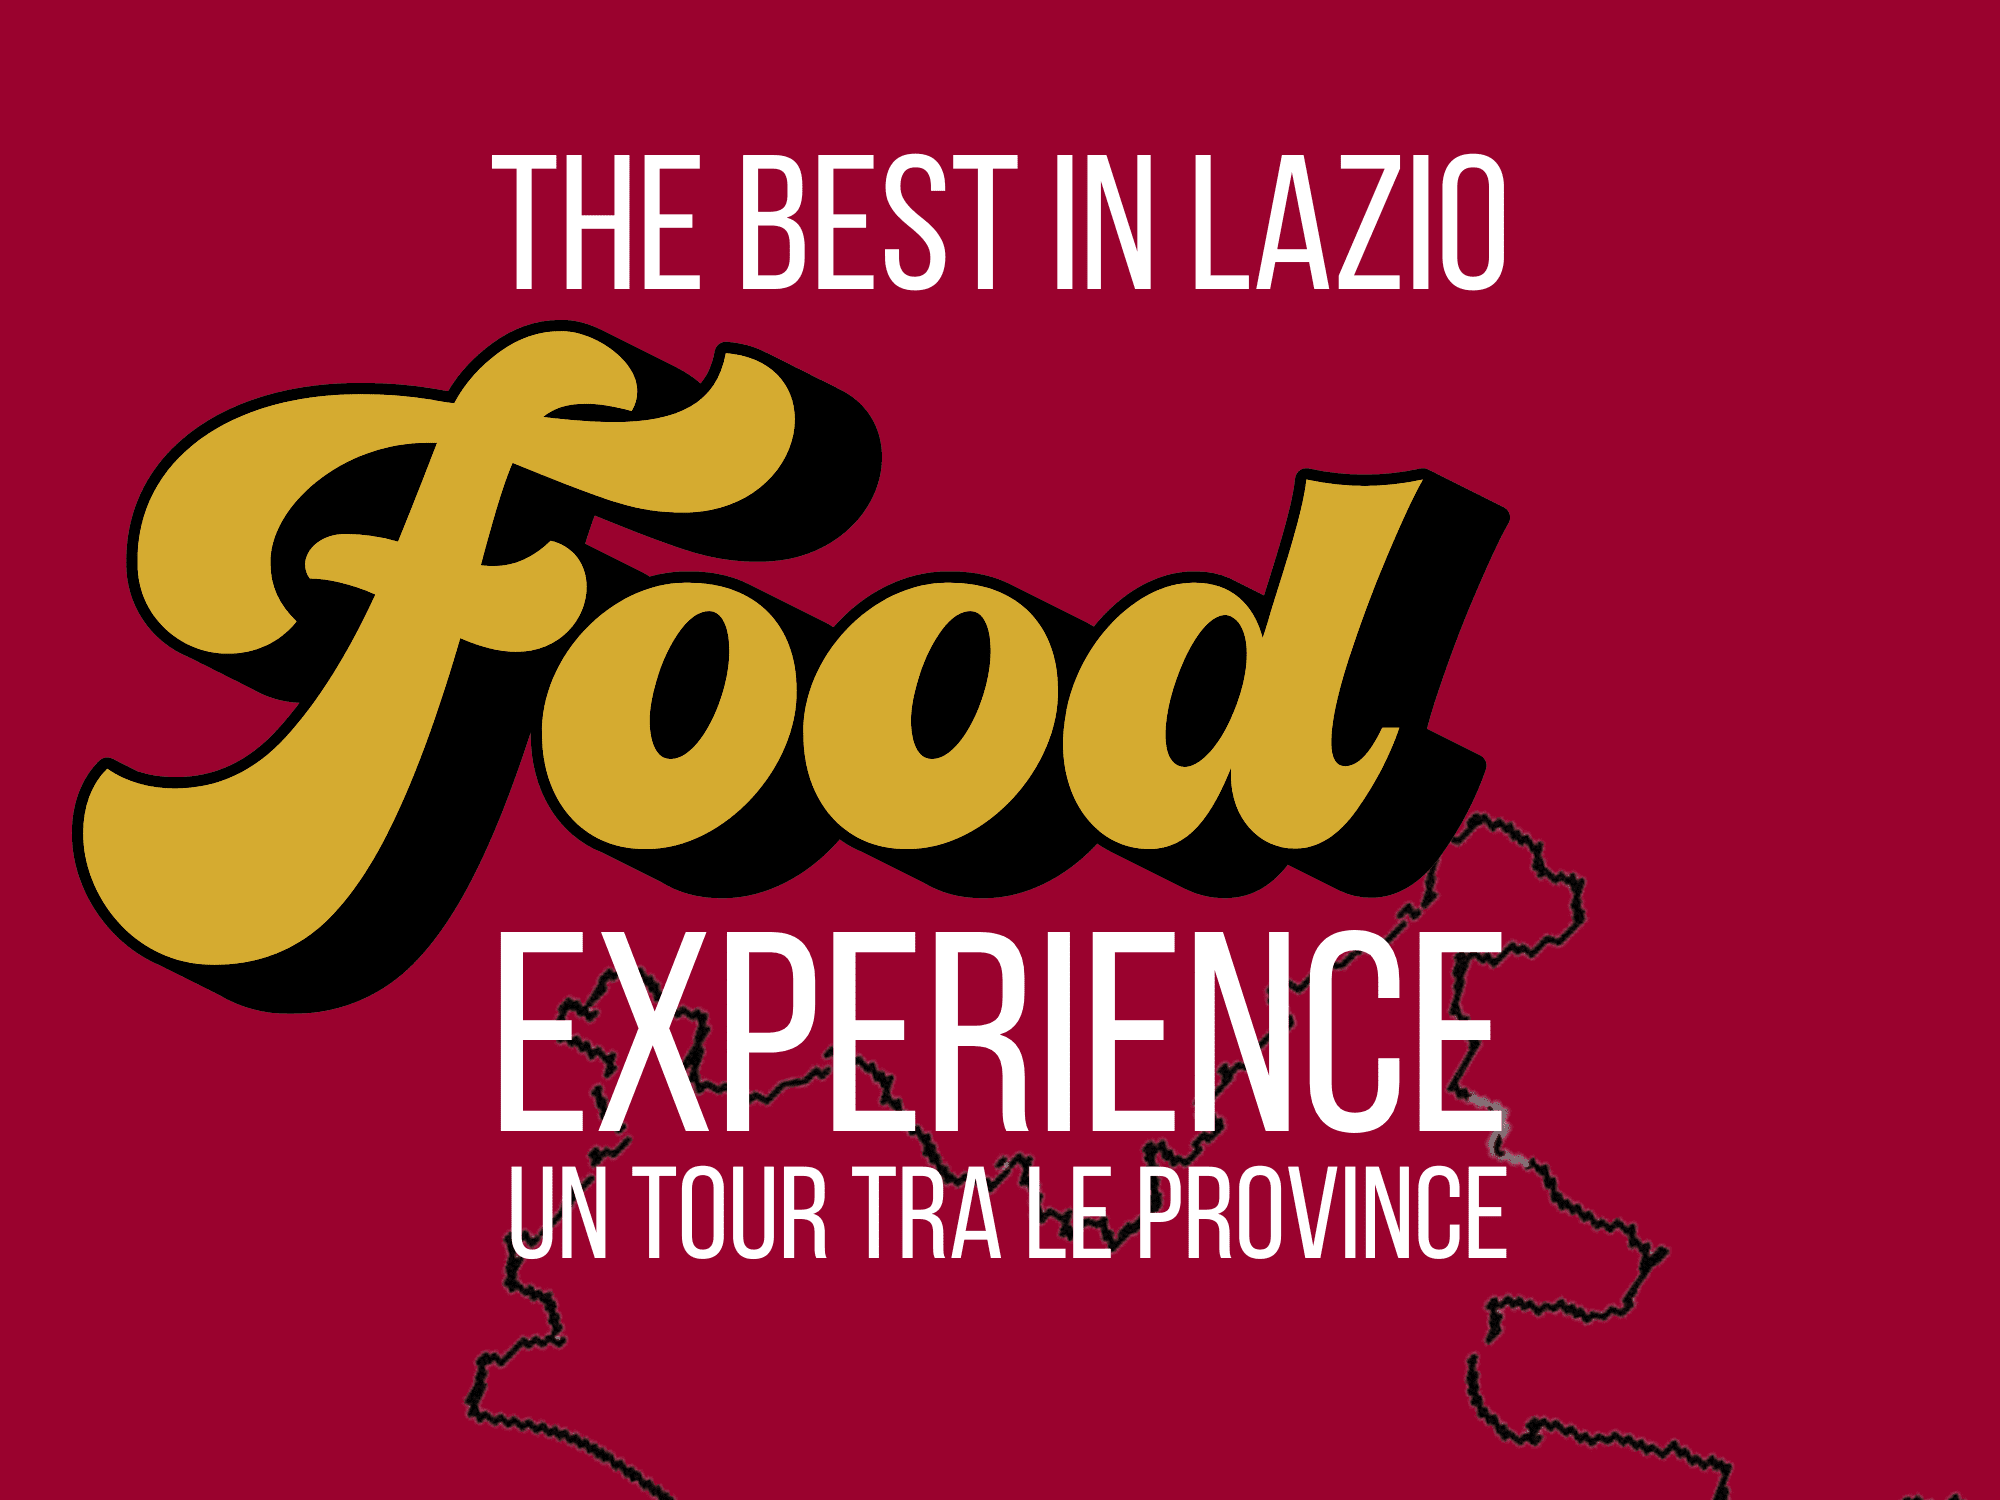 the best in lazio food experience - la serie podcast